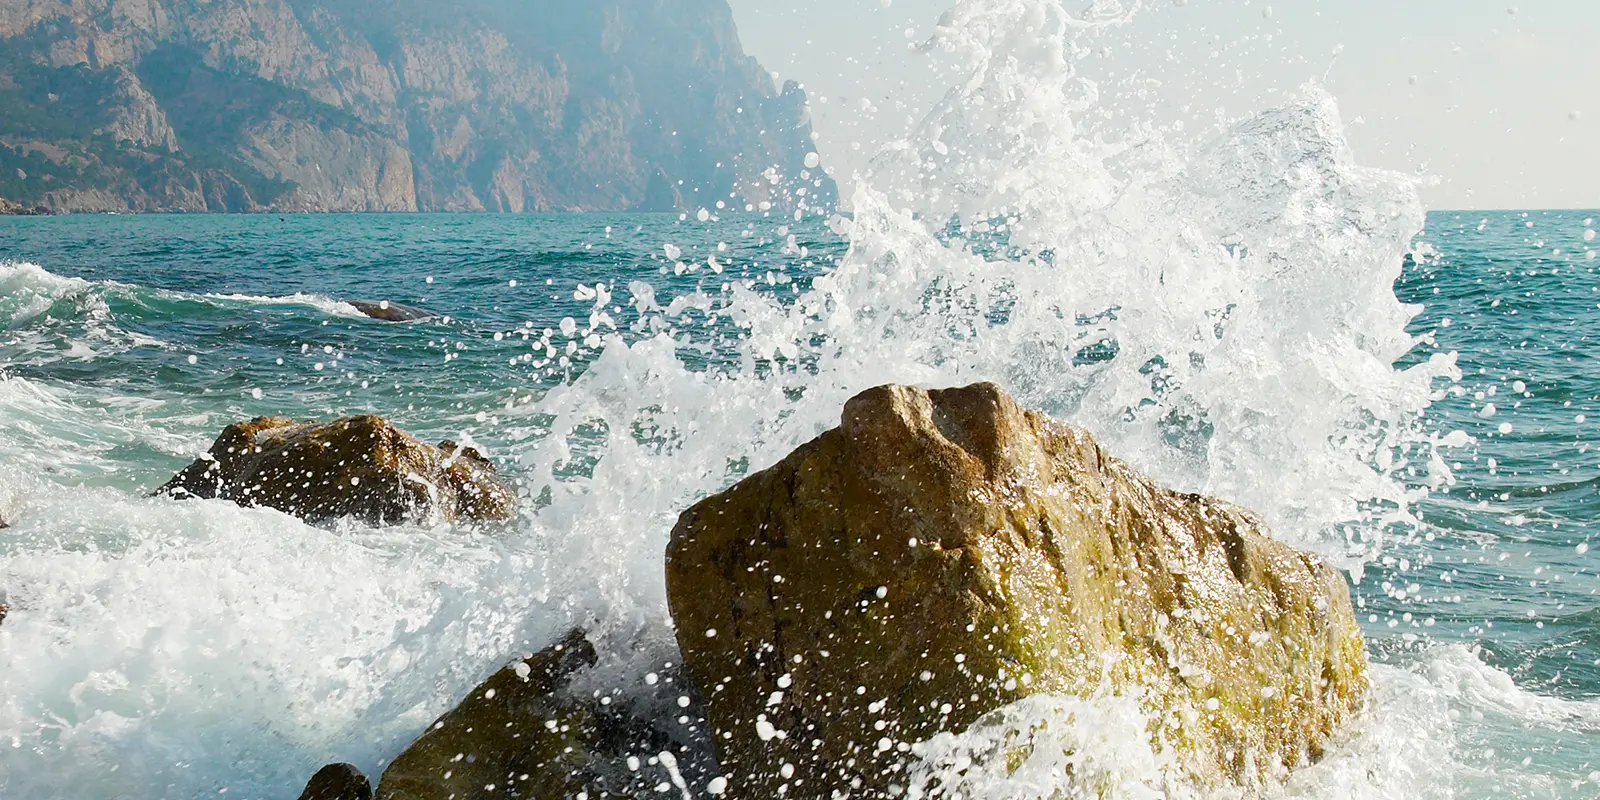 Ocean waves pounding a rock causing spray and foam